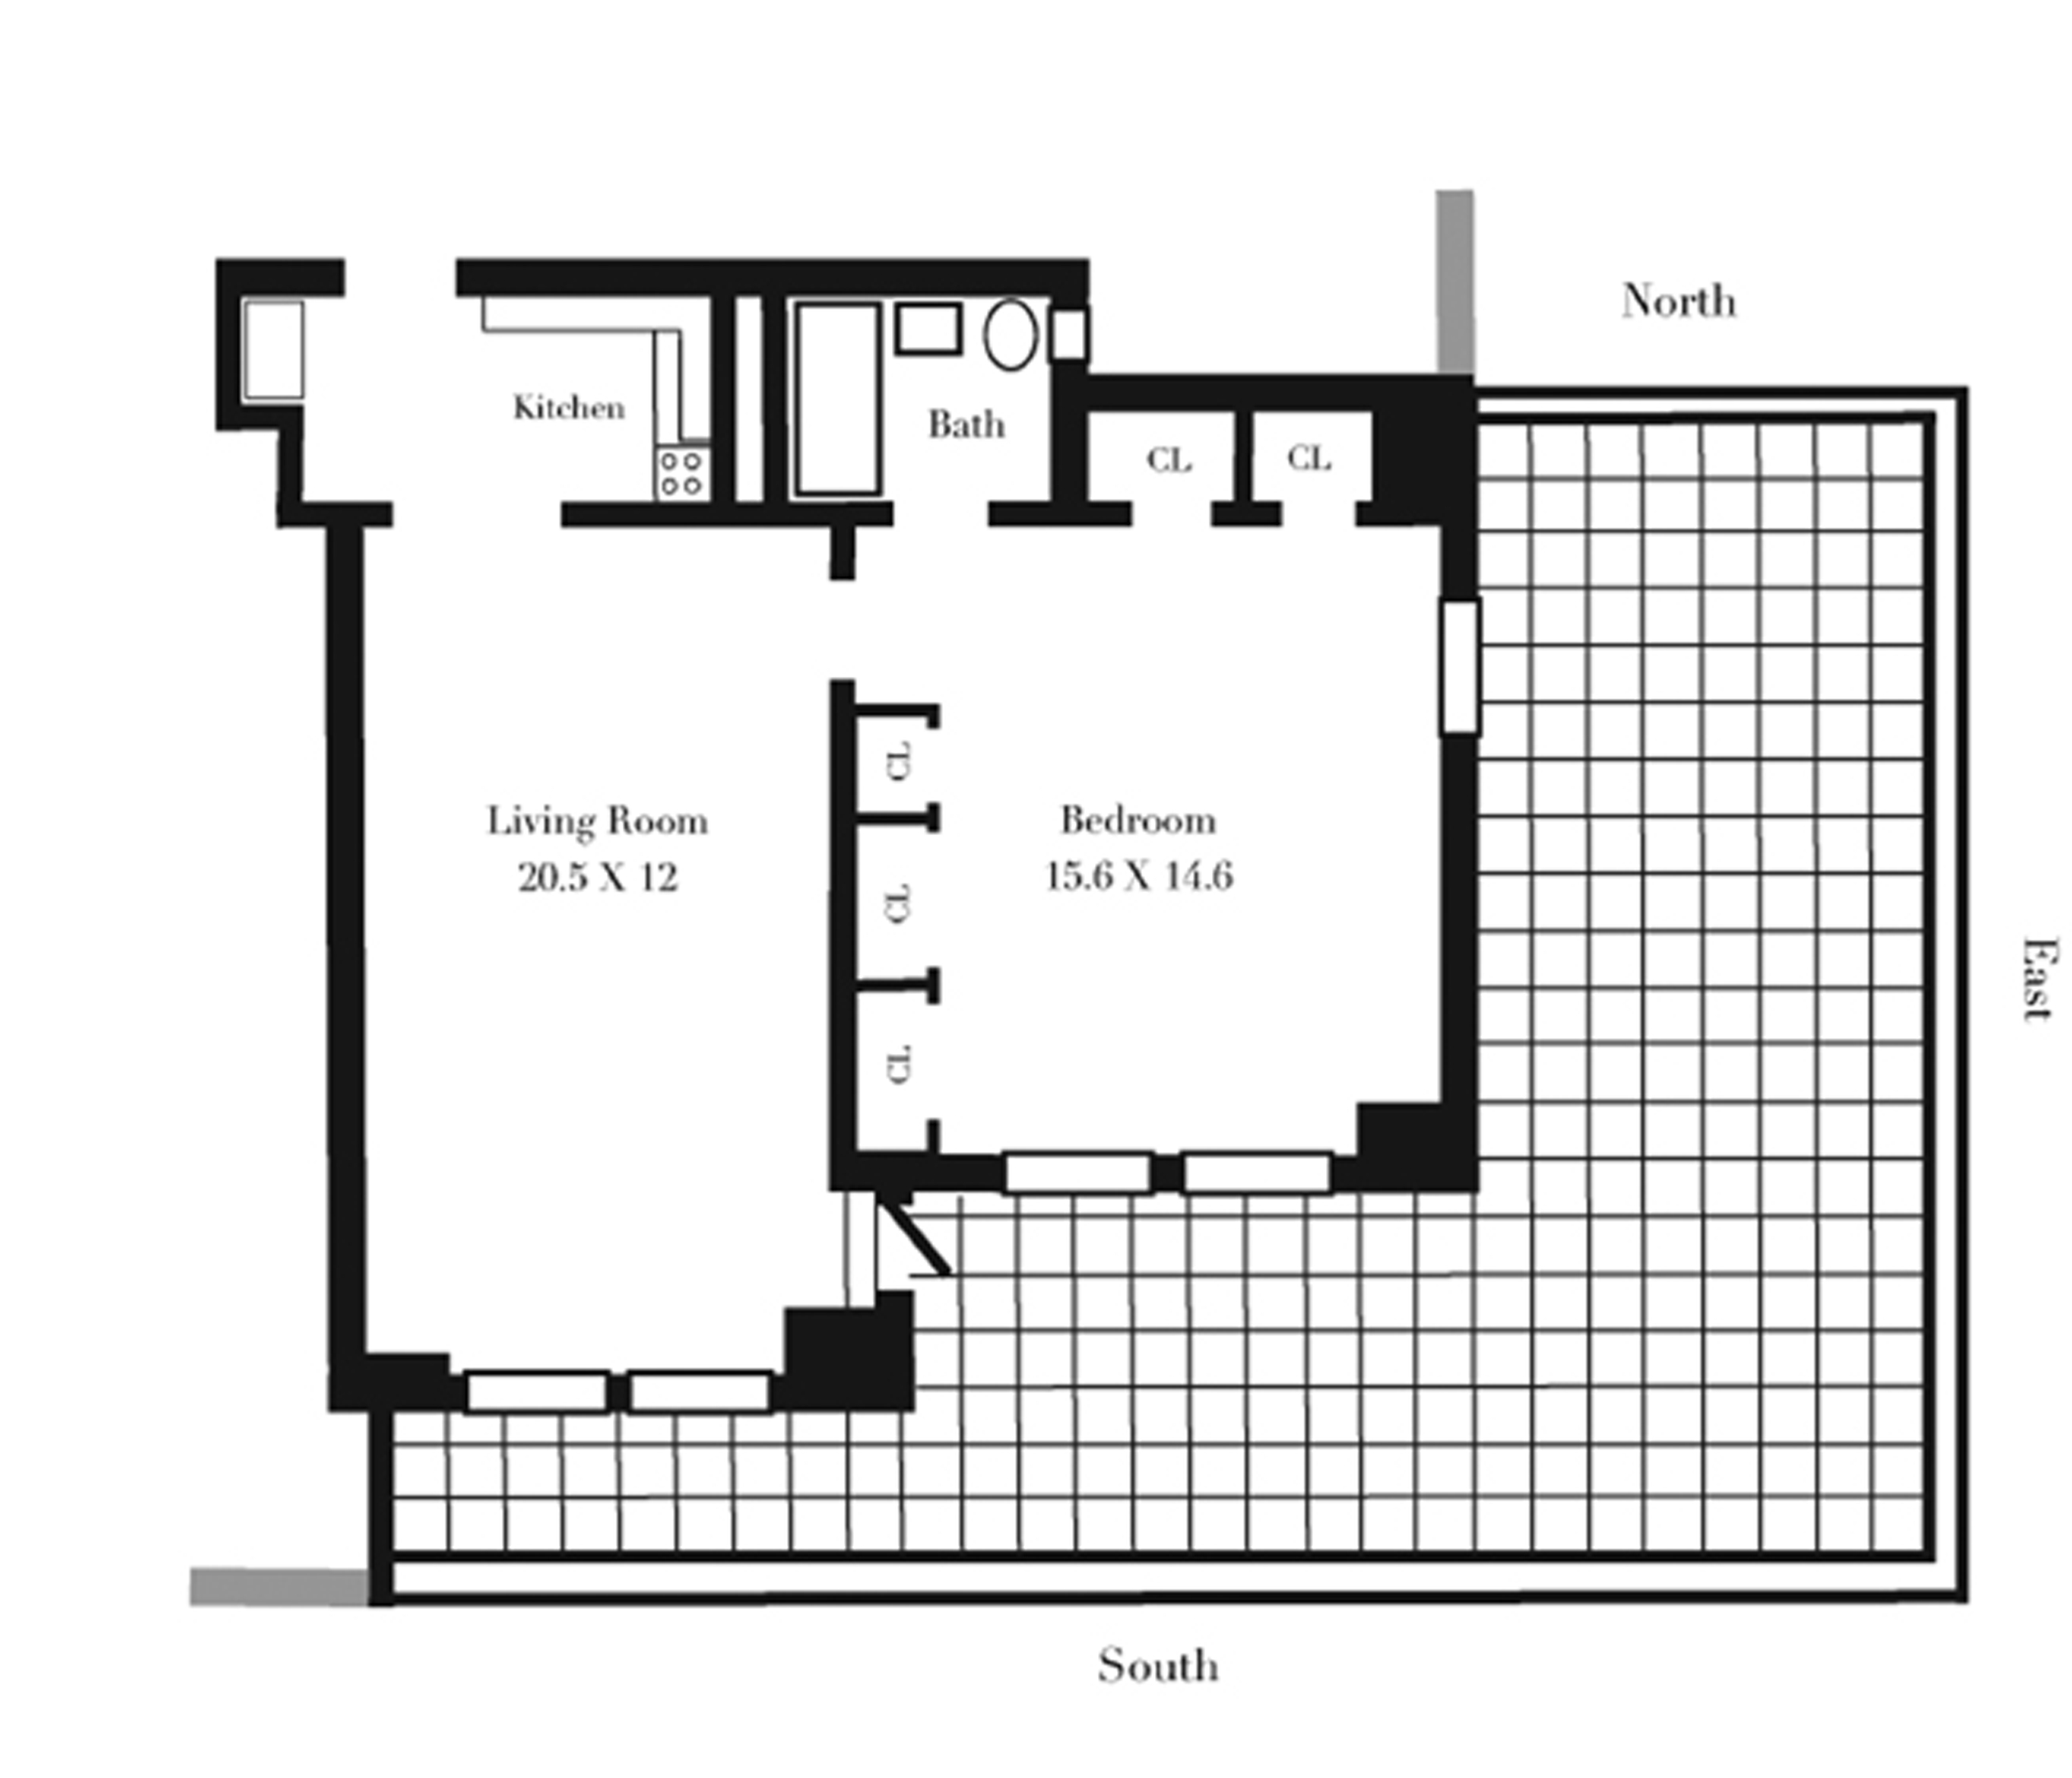 Floorplan for 433 West 34th Street